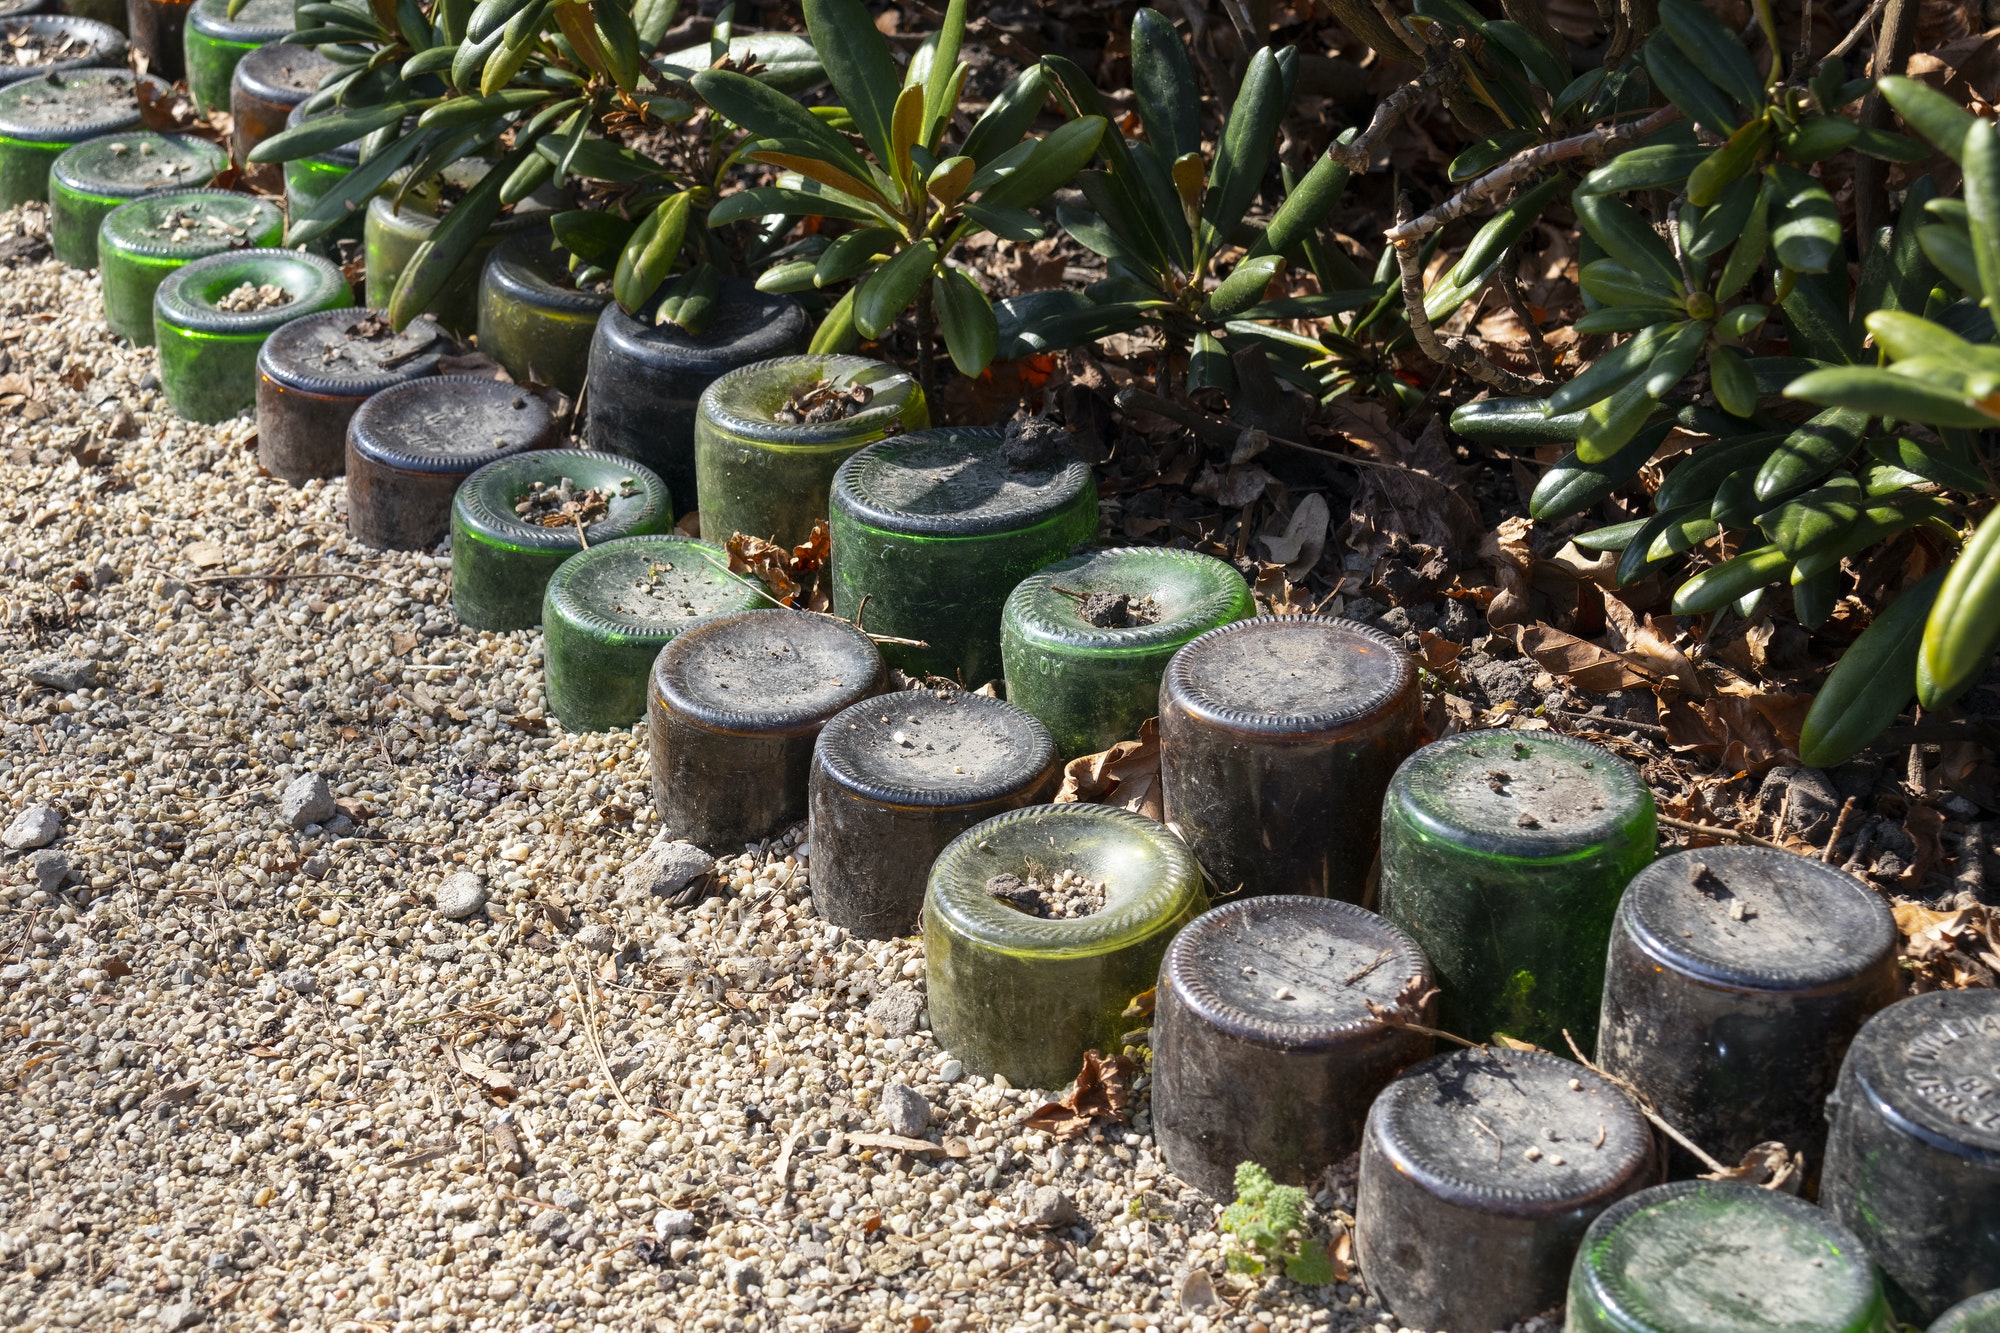 Reuse of glass bottles as a border in the garden